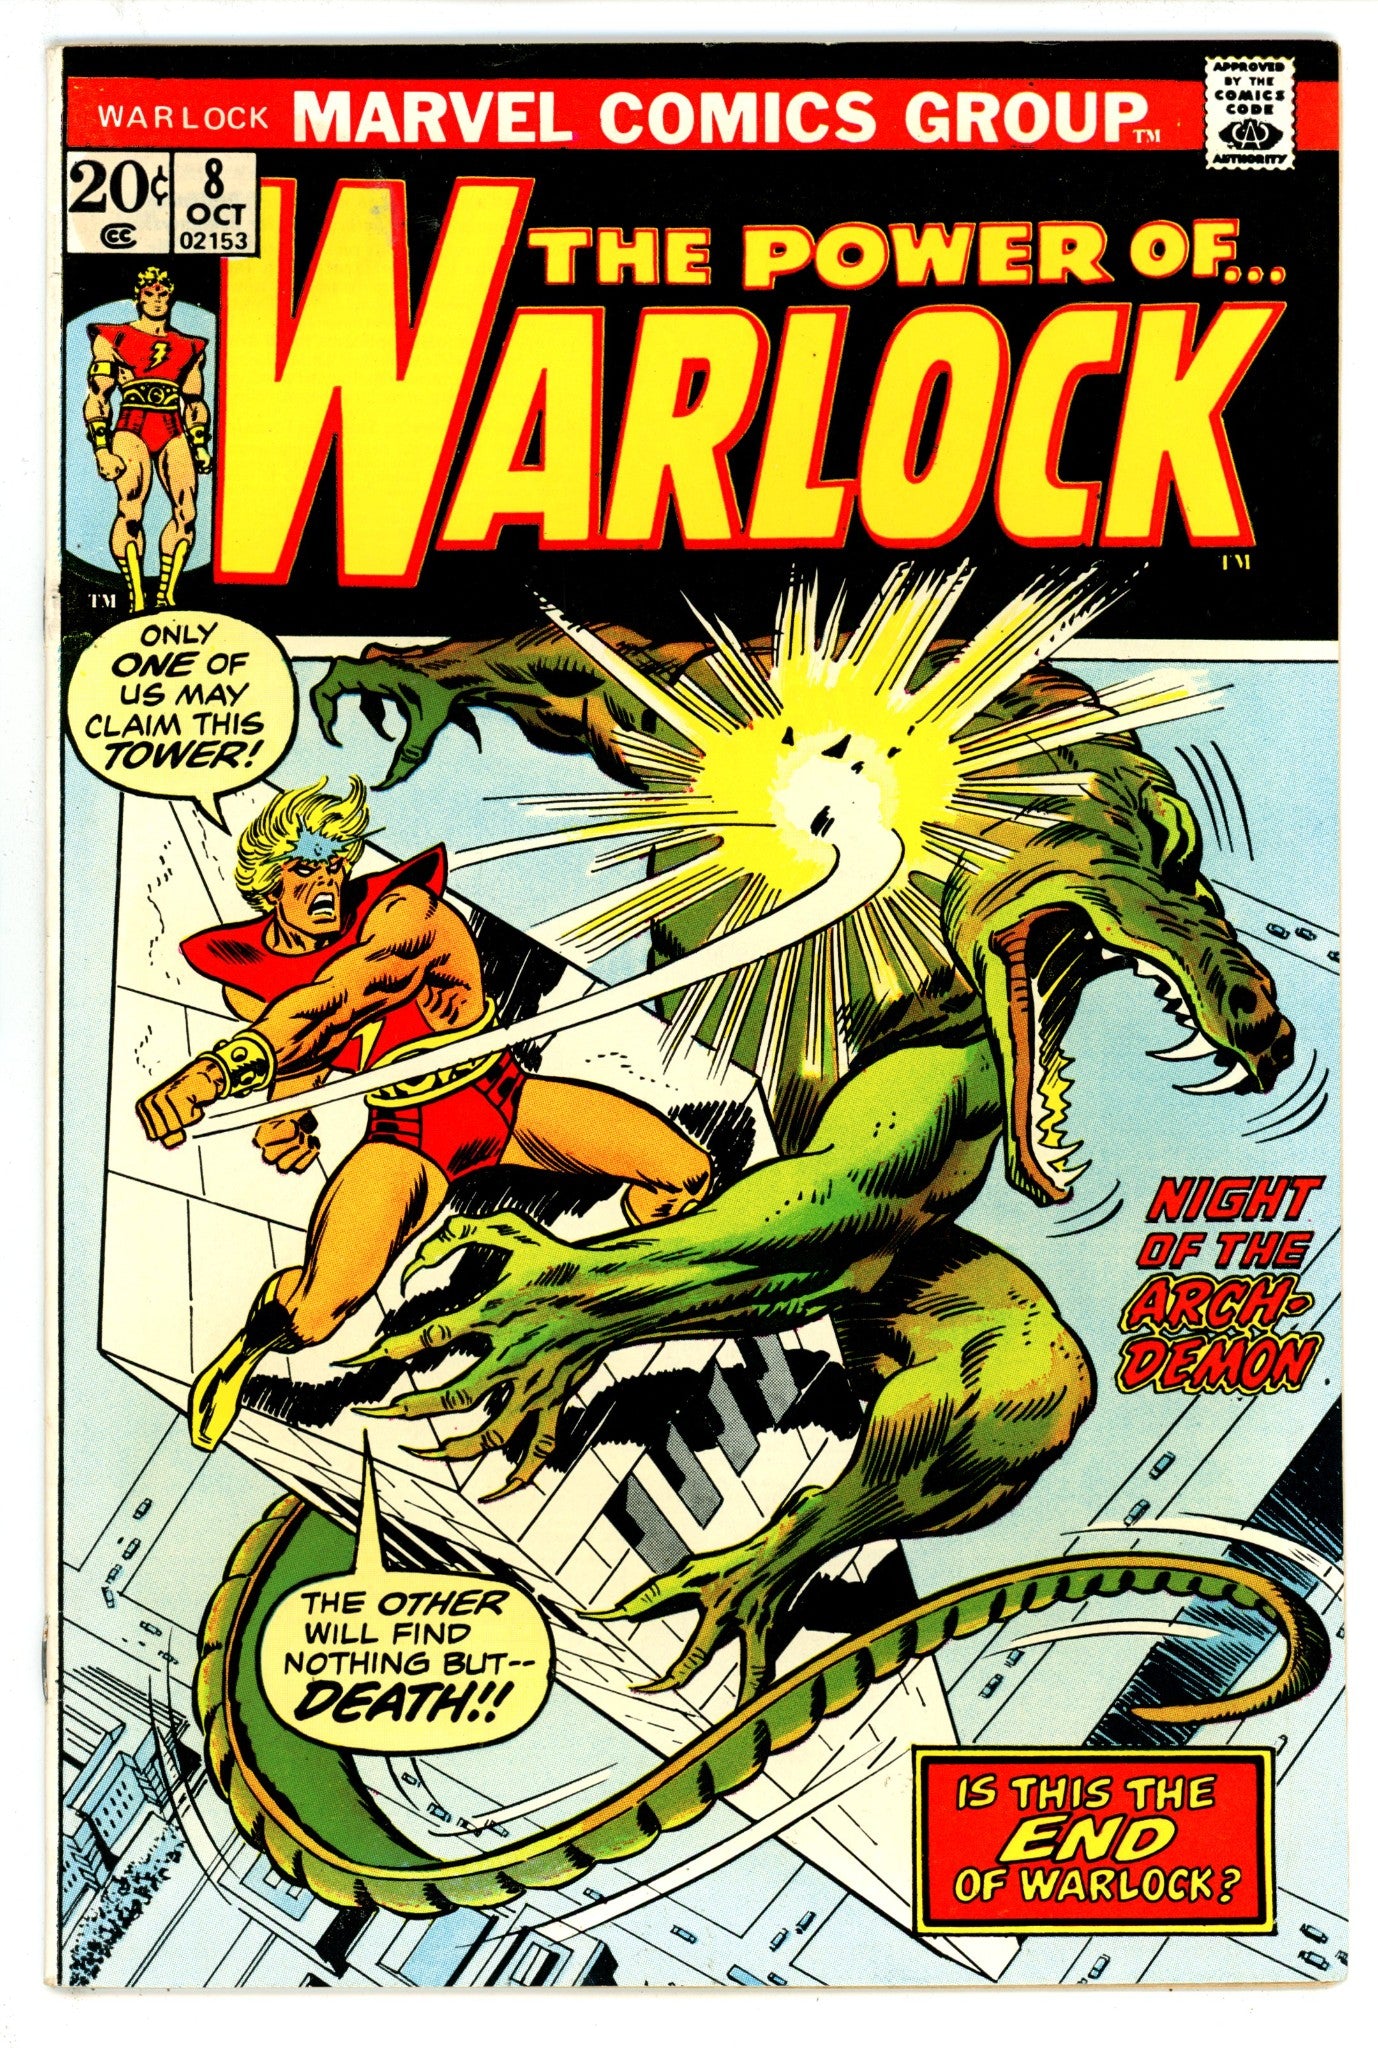 Warlock Vol 1 8 VG (4.0) (1973) 